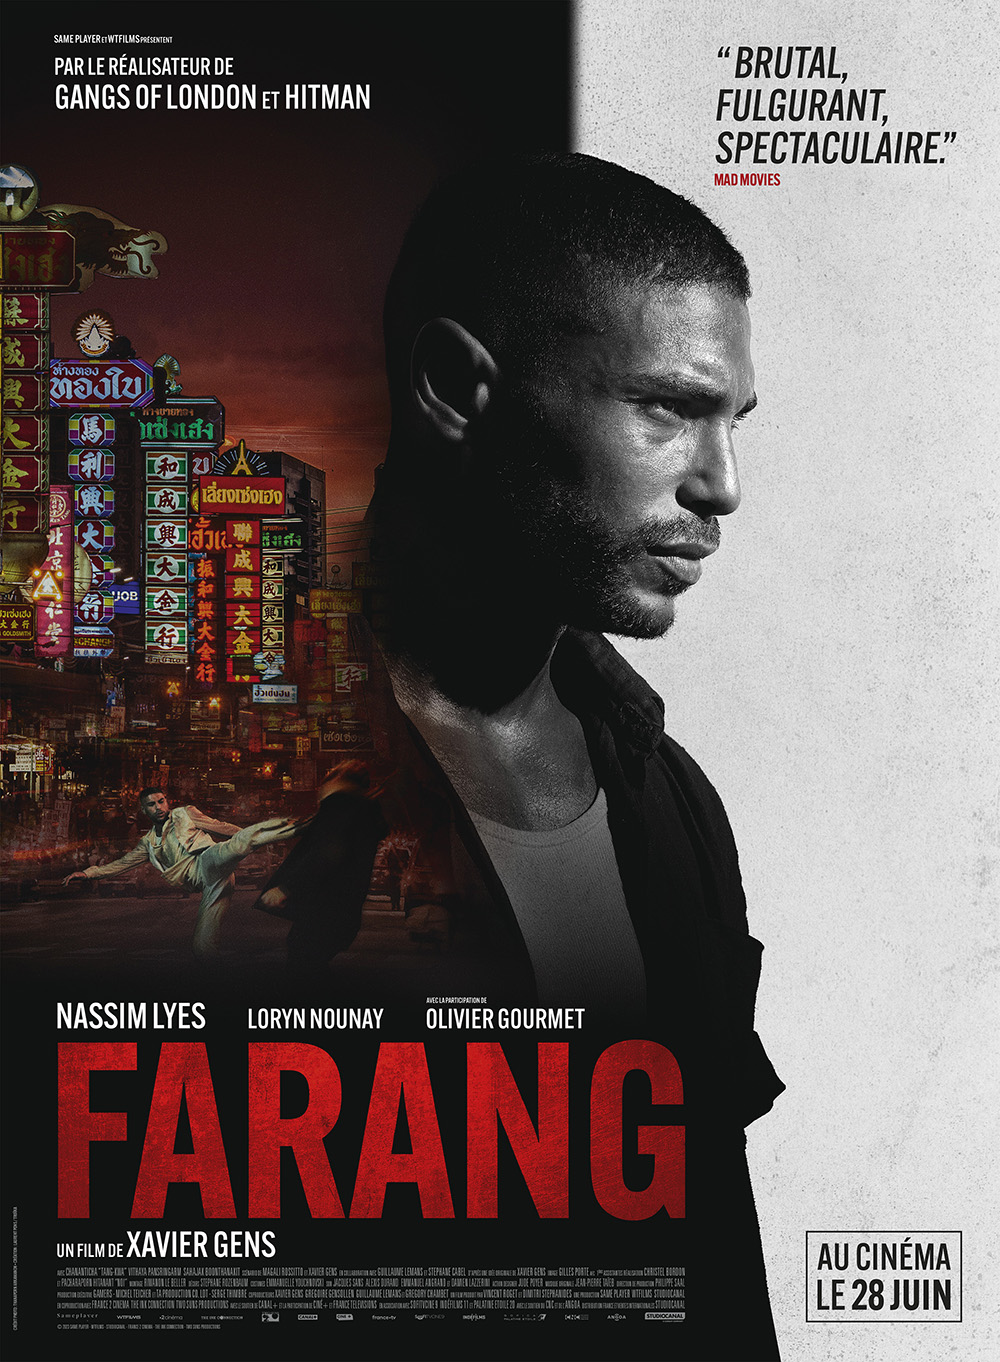 Farang Trailer & Poster